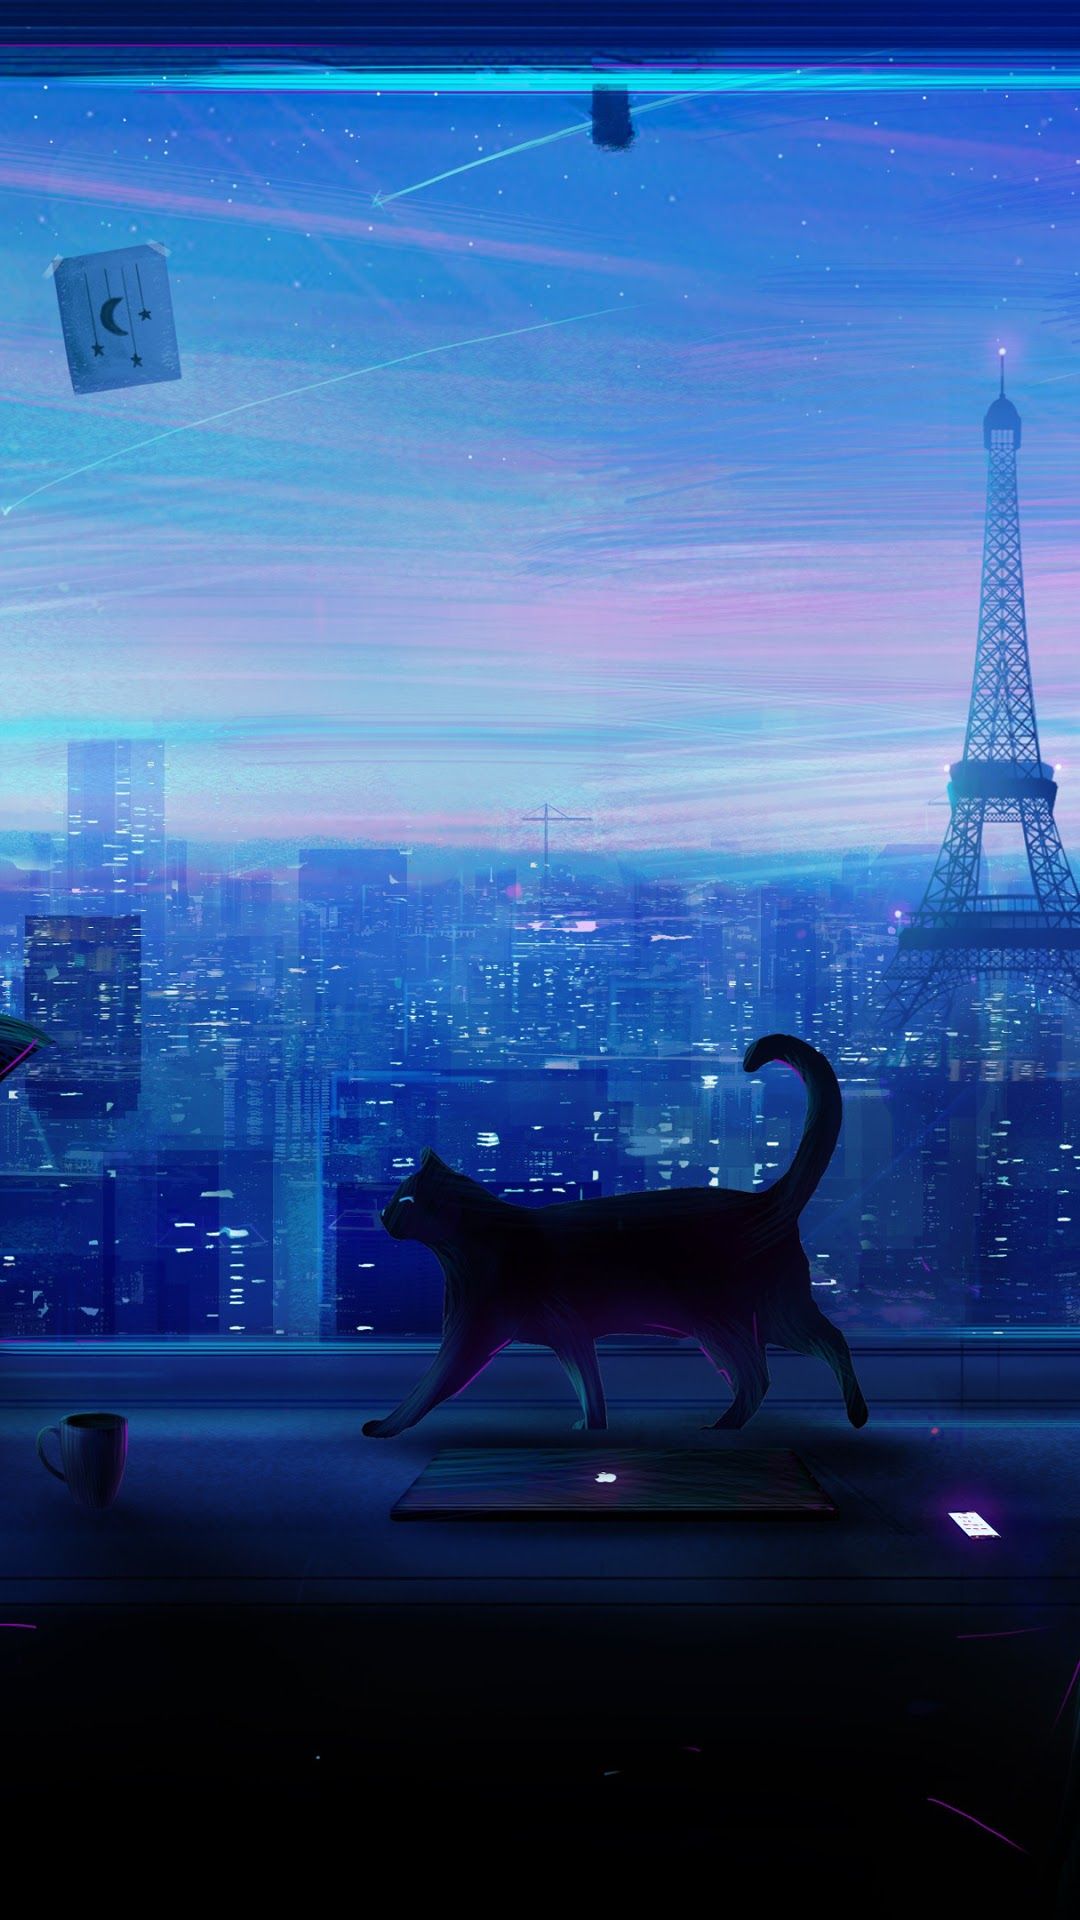 Cat City Night Scenery Anime 4K Wallpaper